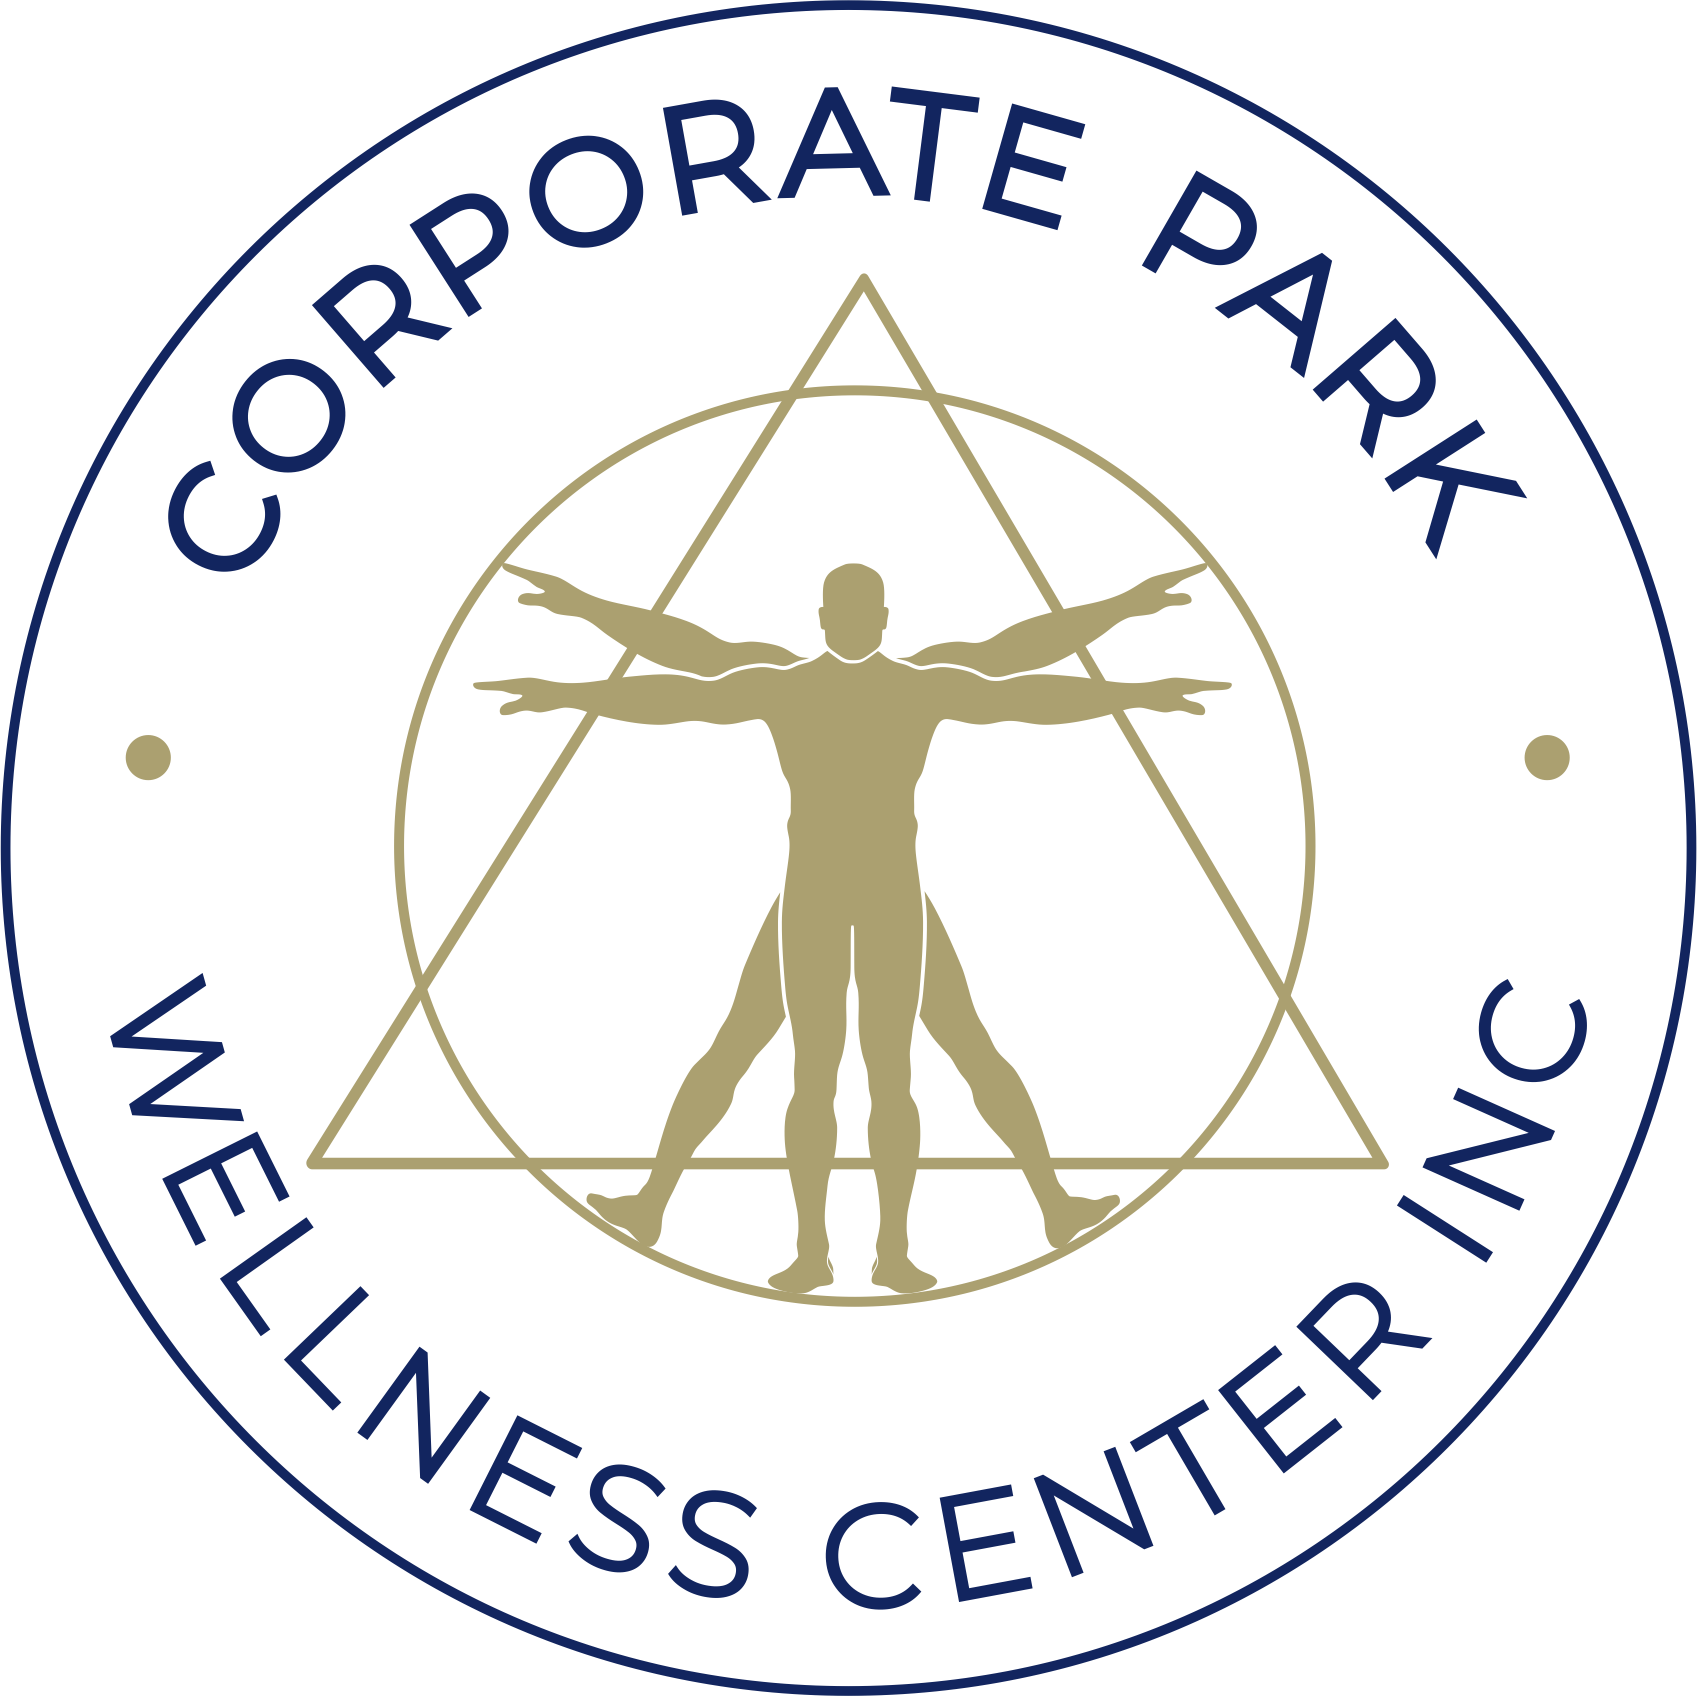 Corporate Park Wellness Center Inc.